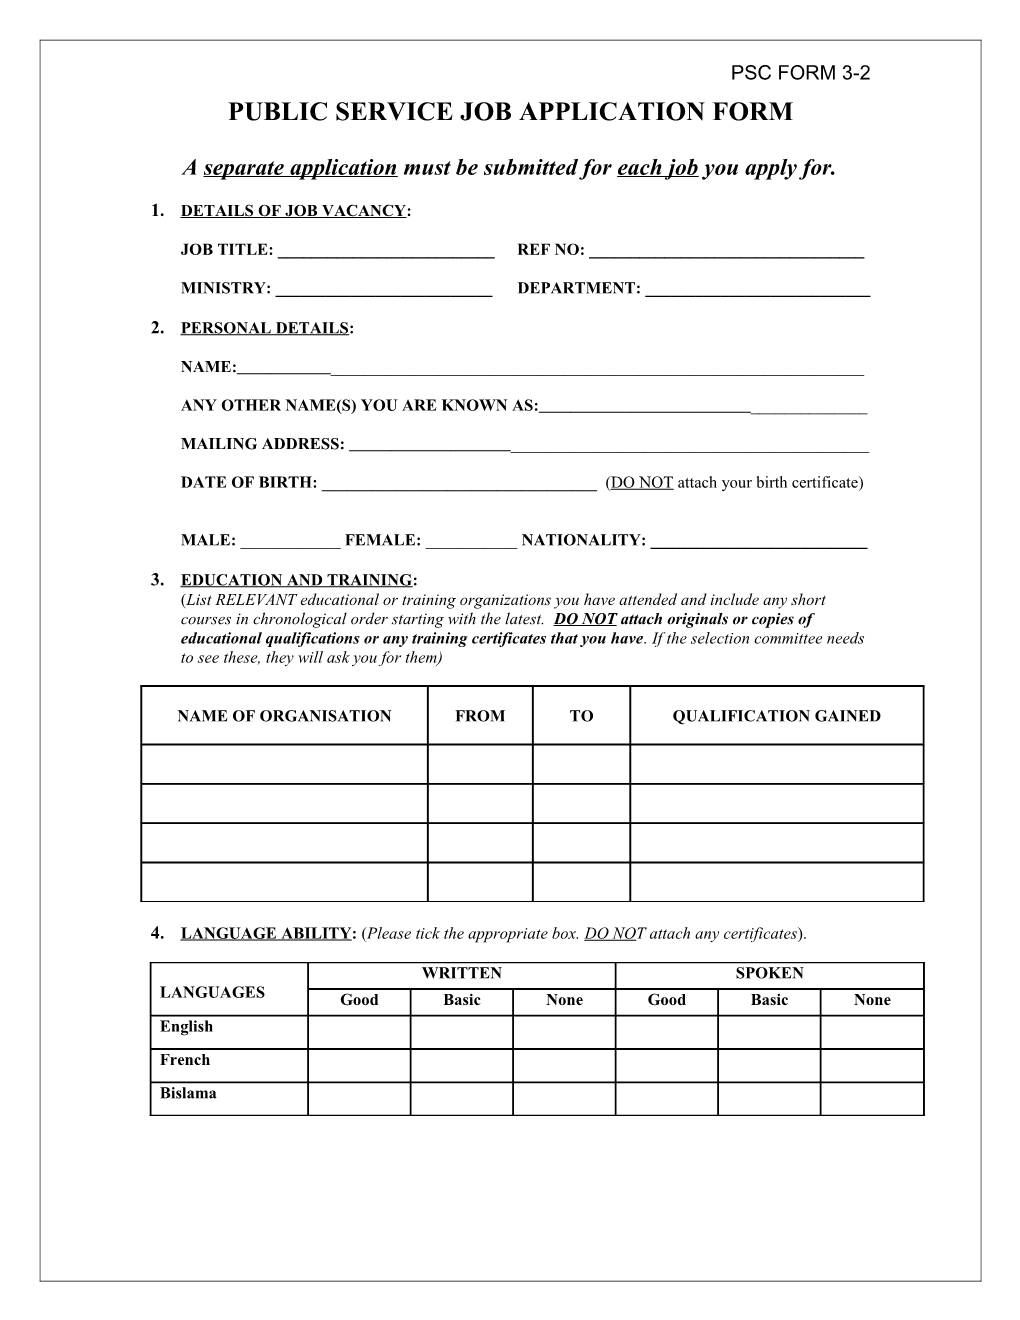 Public Service Job Application Form